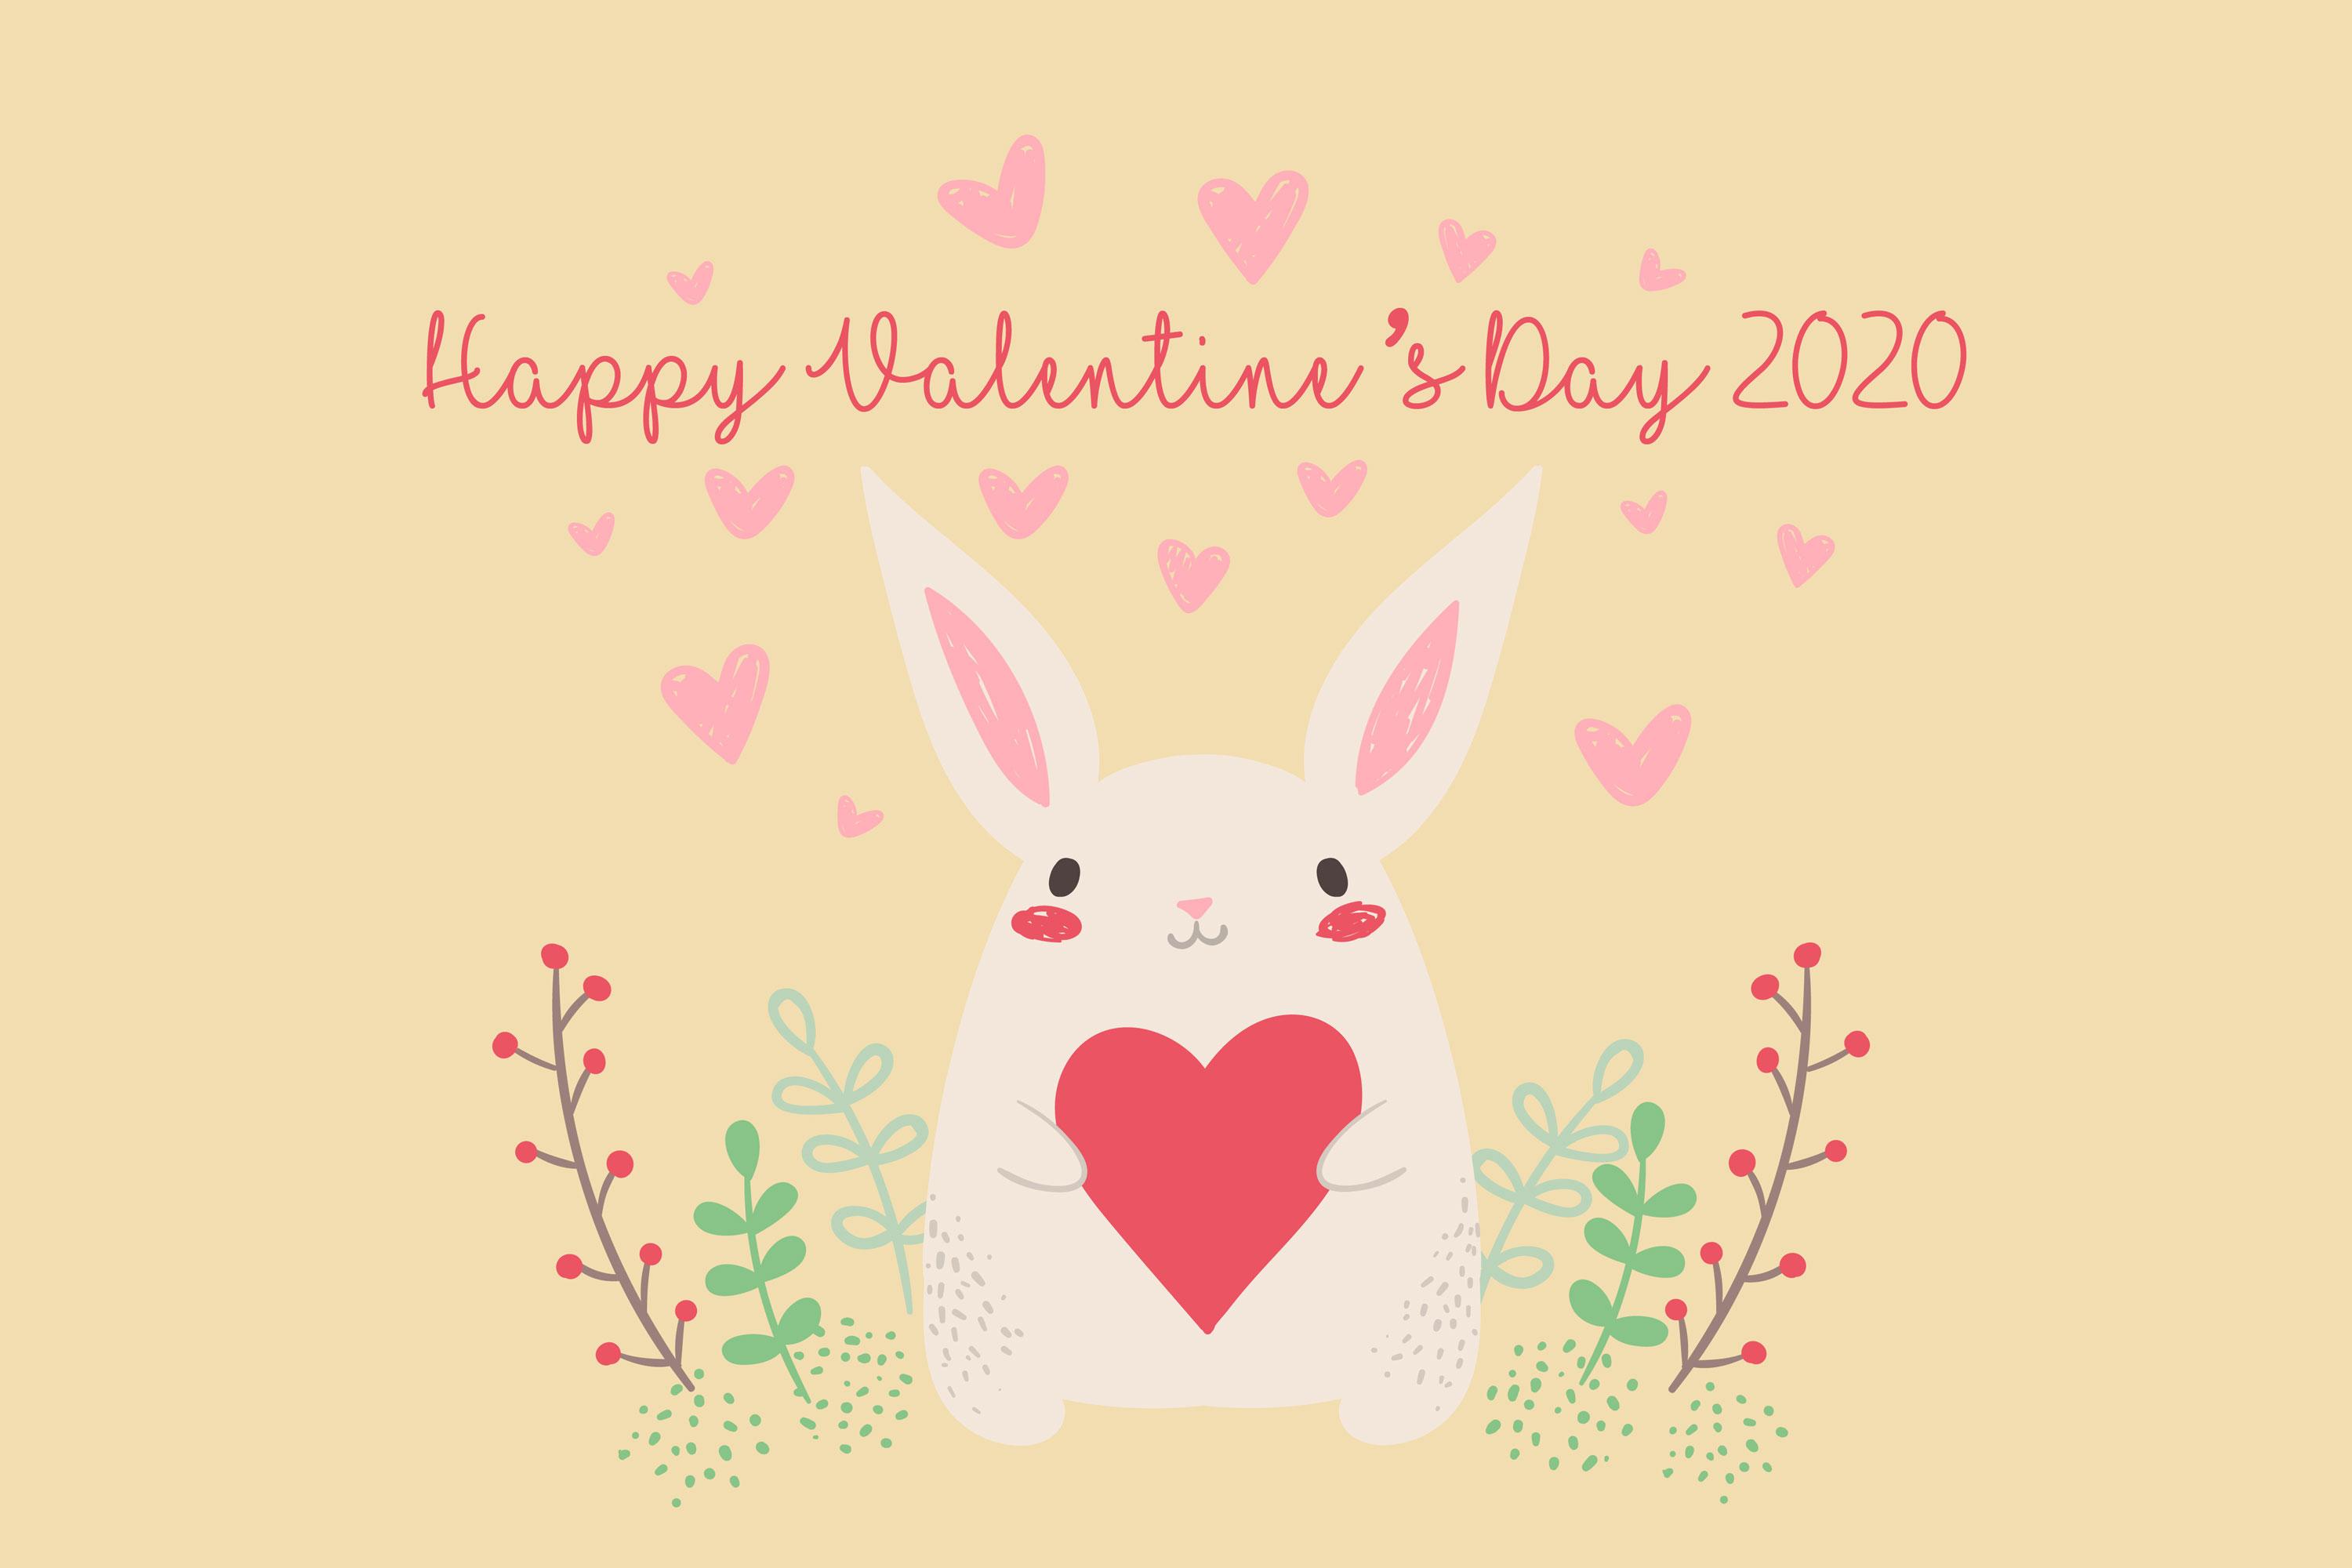 Beautiful Free Valentine's Day Love Stock Image